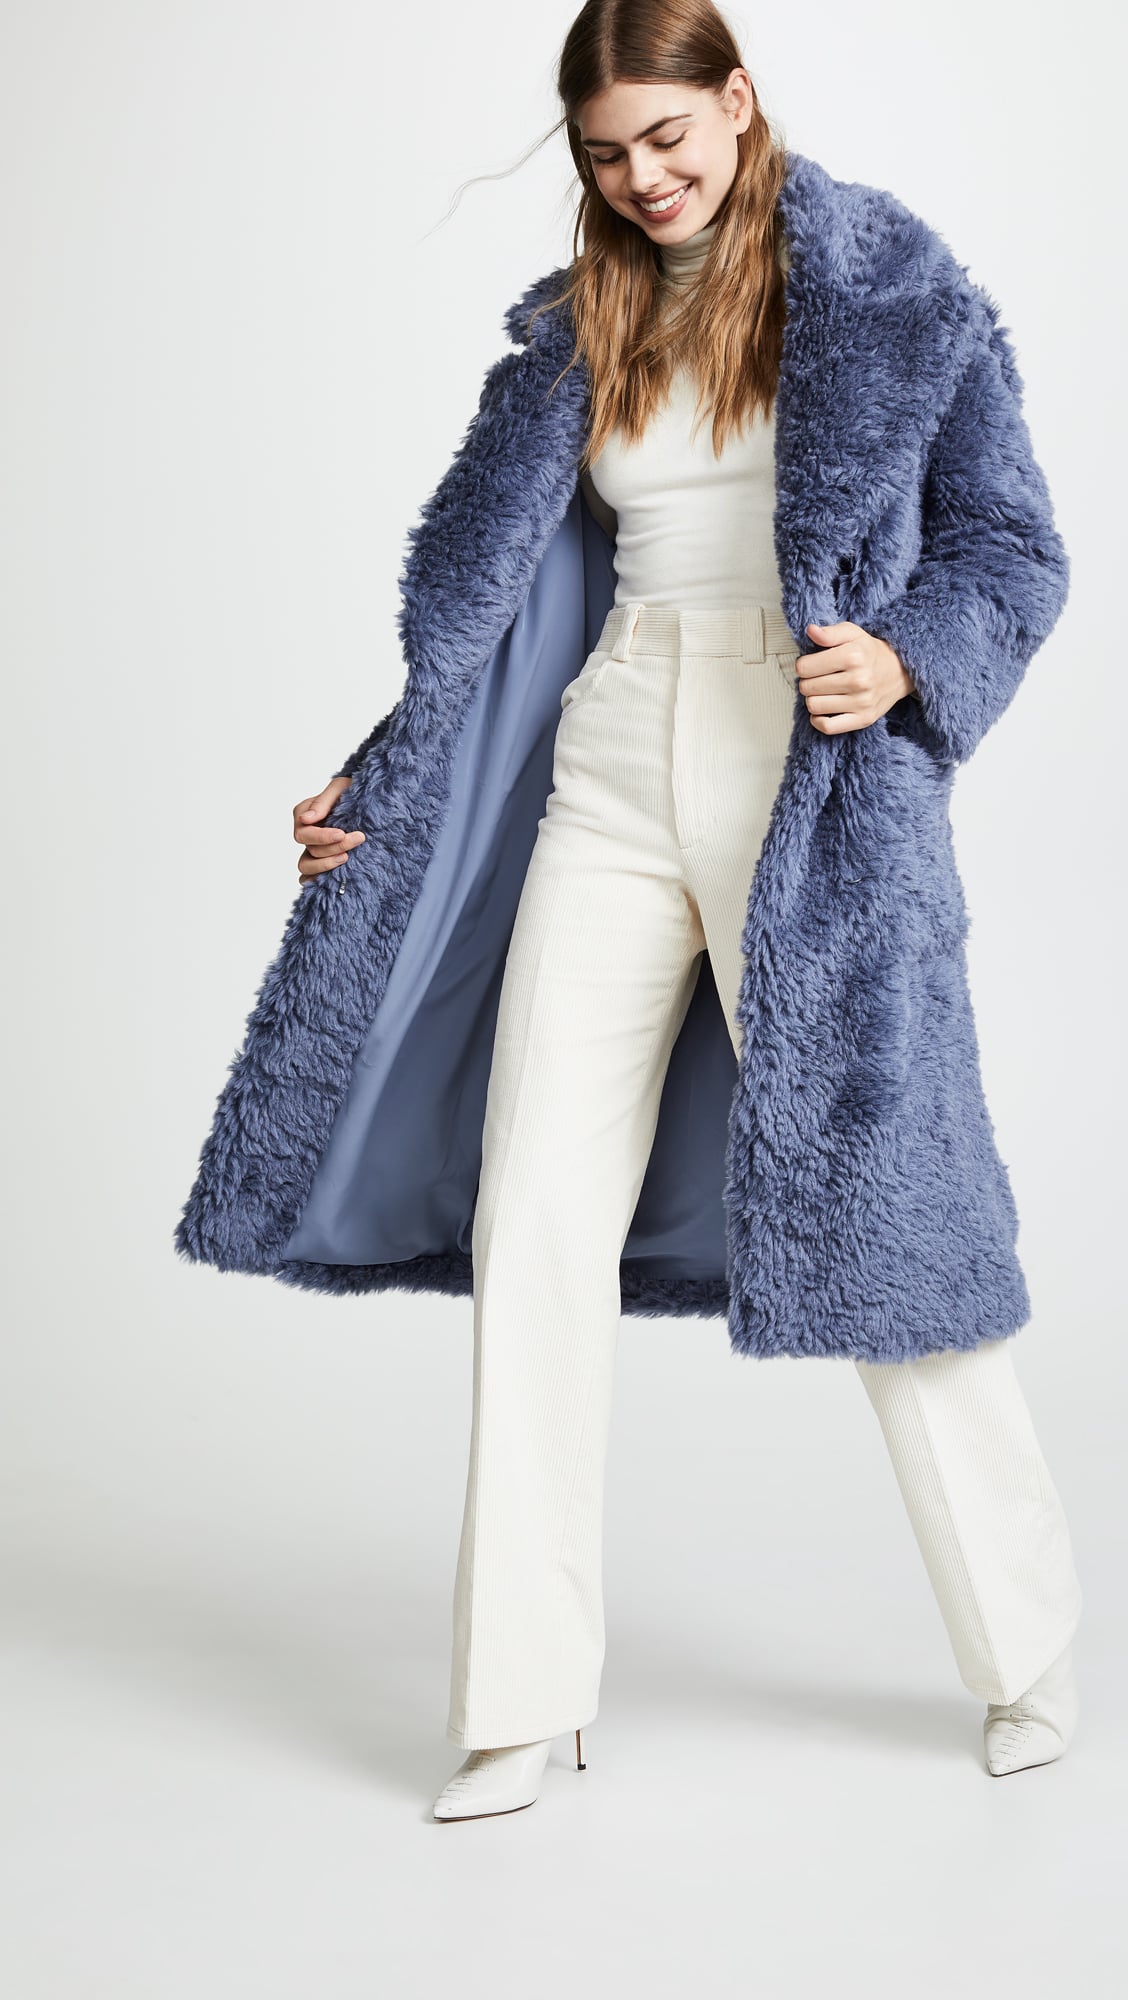 Ularma Faux Fur Cropped Jackets for Women Cozy Flannel Shaggy Teddy Coat Full Zip Outwear Jacket with Pockets Winter 